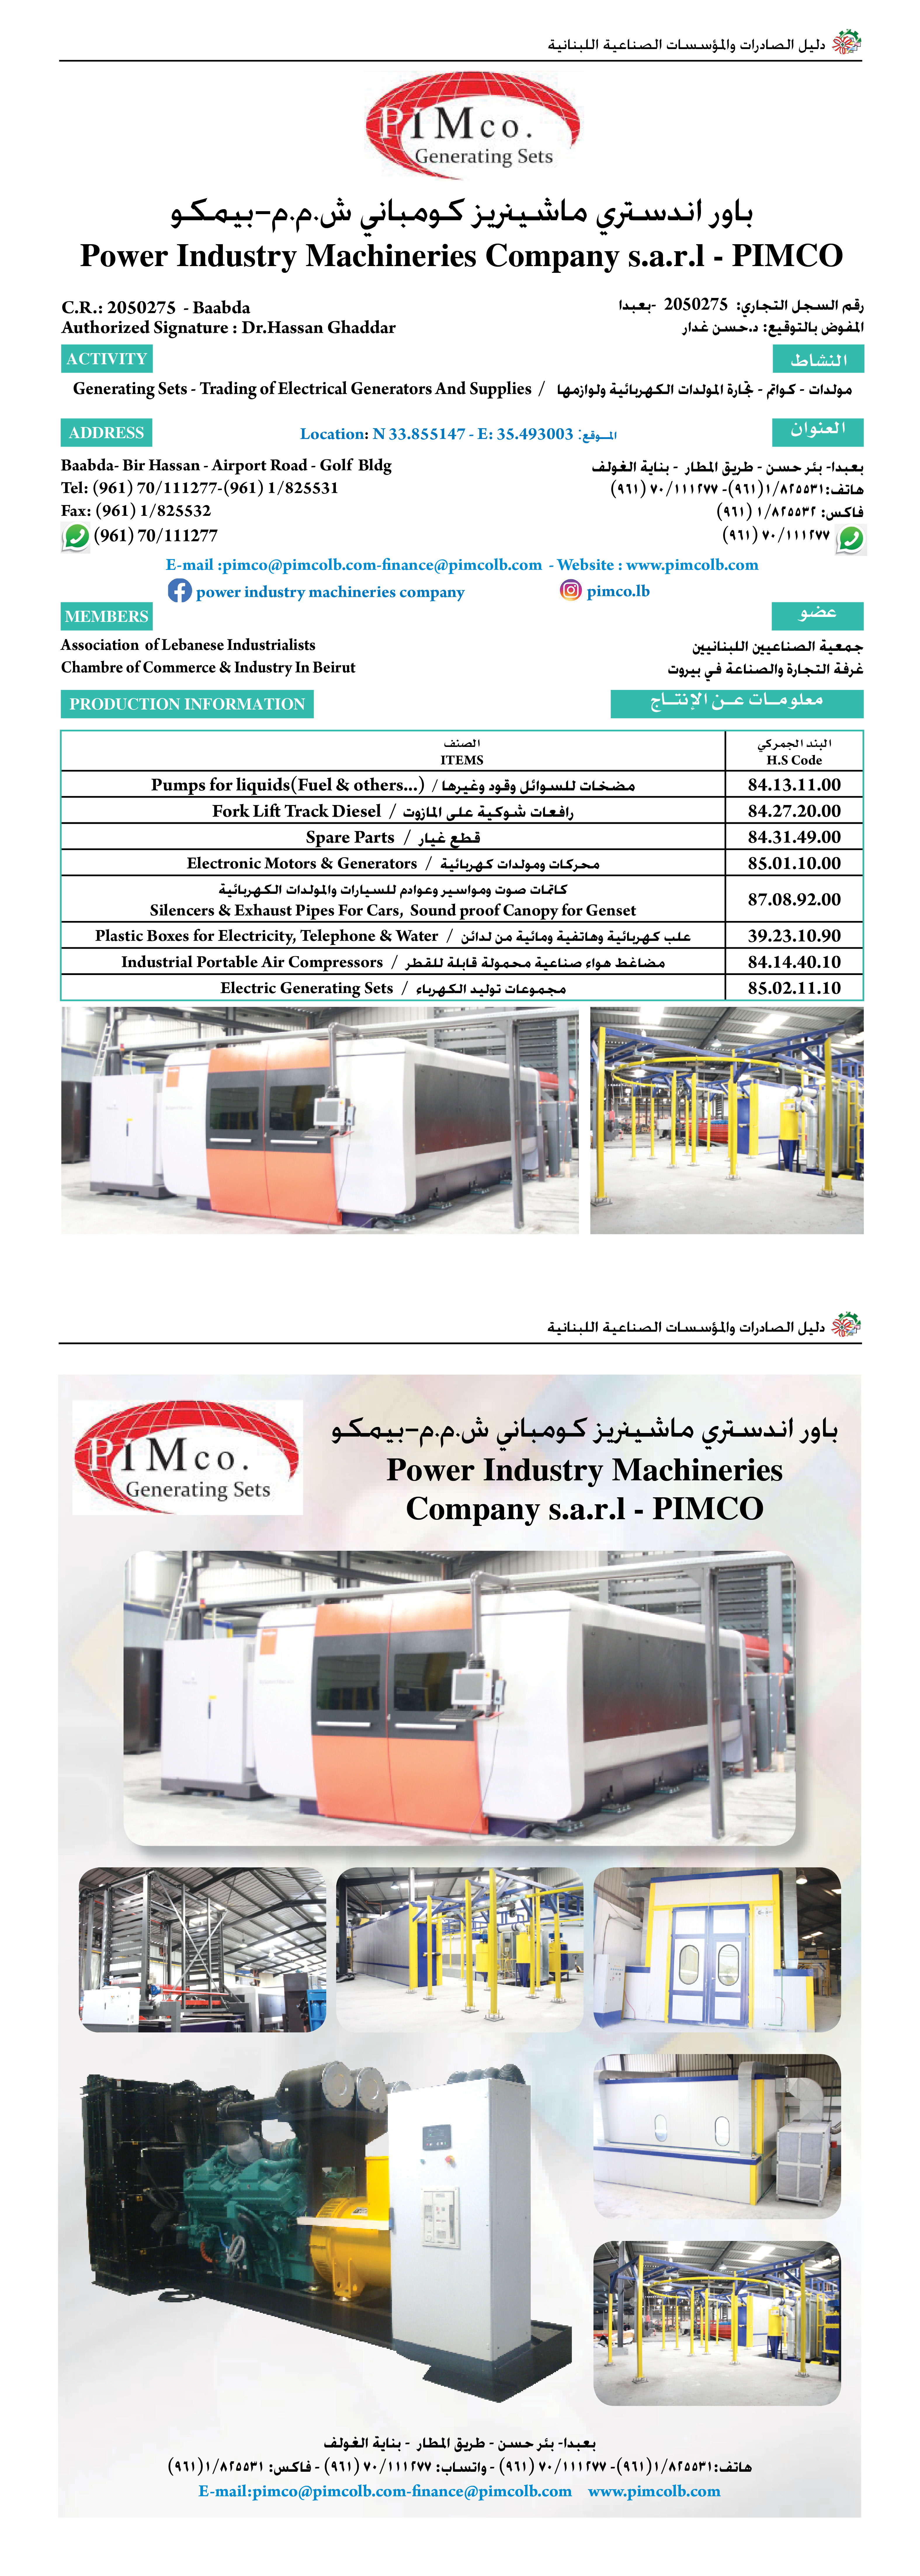 Power Industry Machineries Company Sarl - Pimco